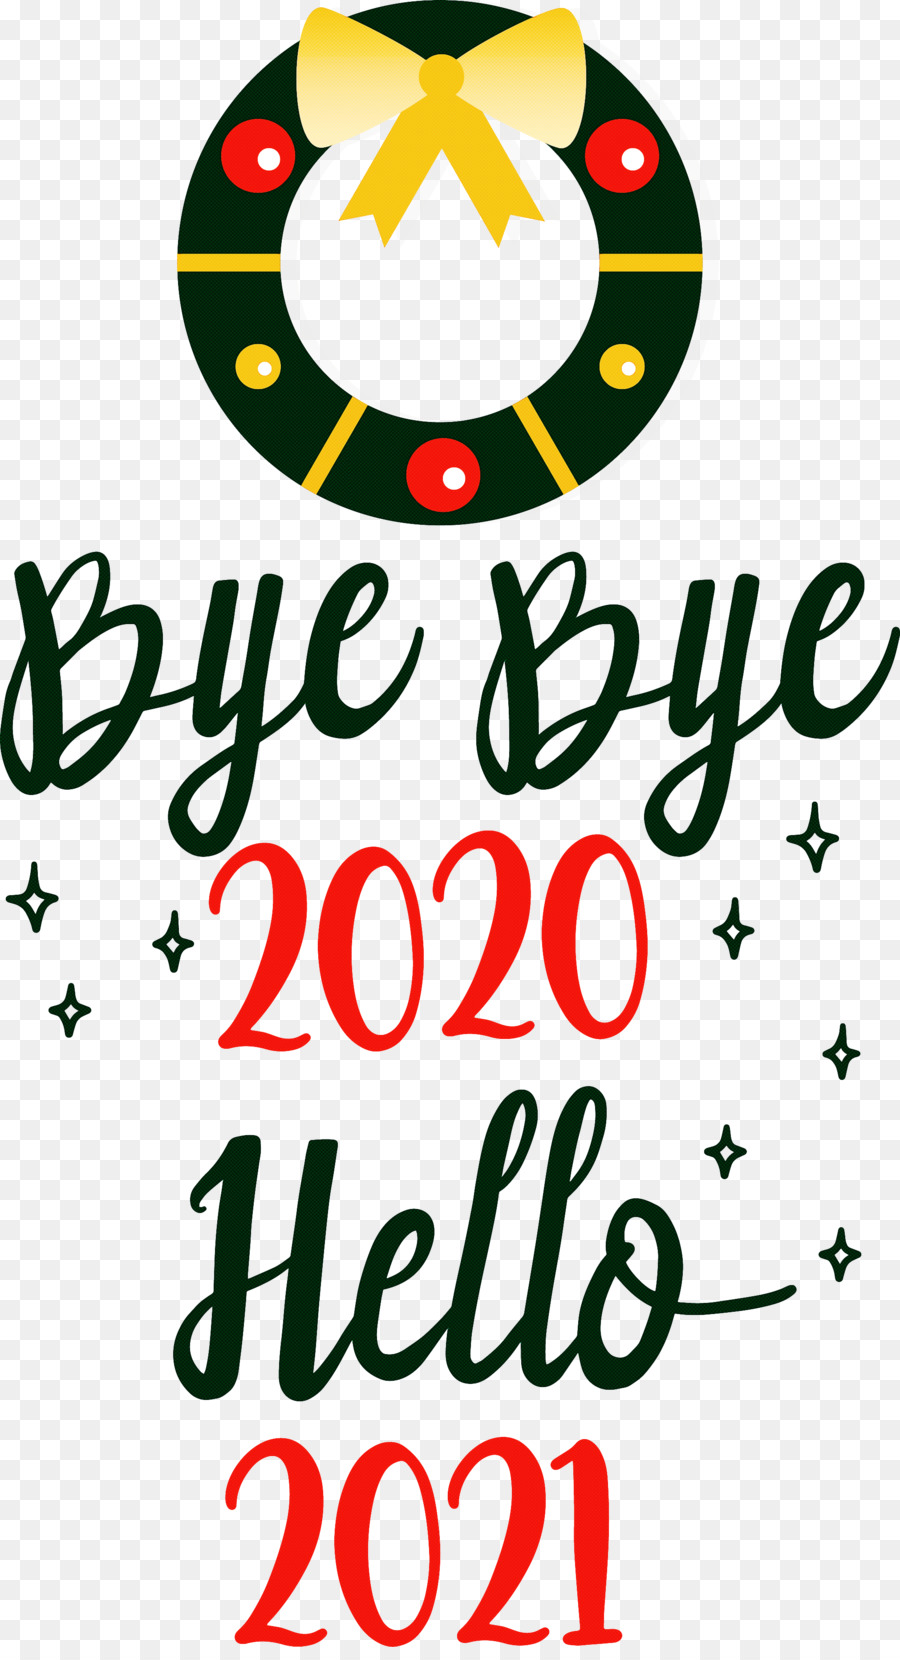 Hello 2021 Year Bye bye 2020 Year